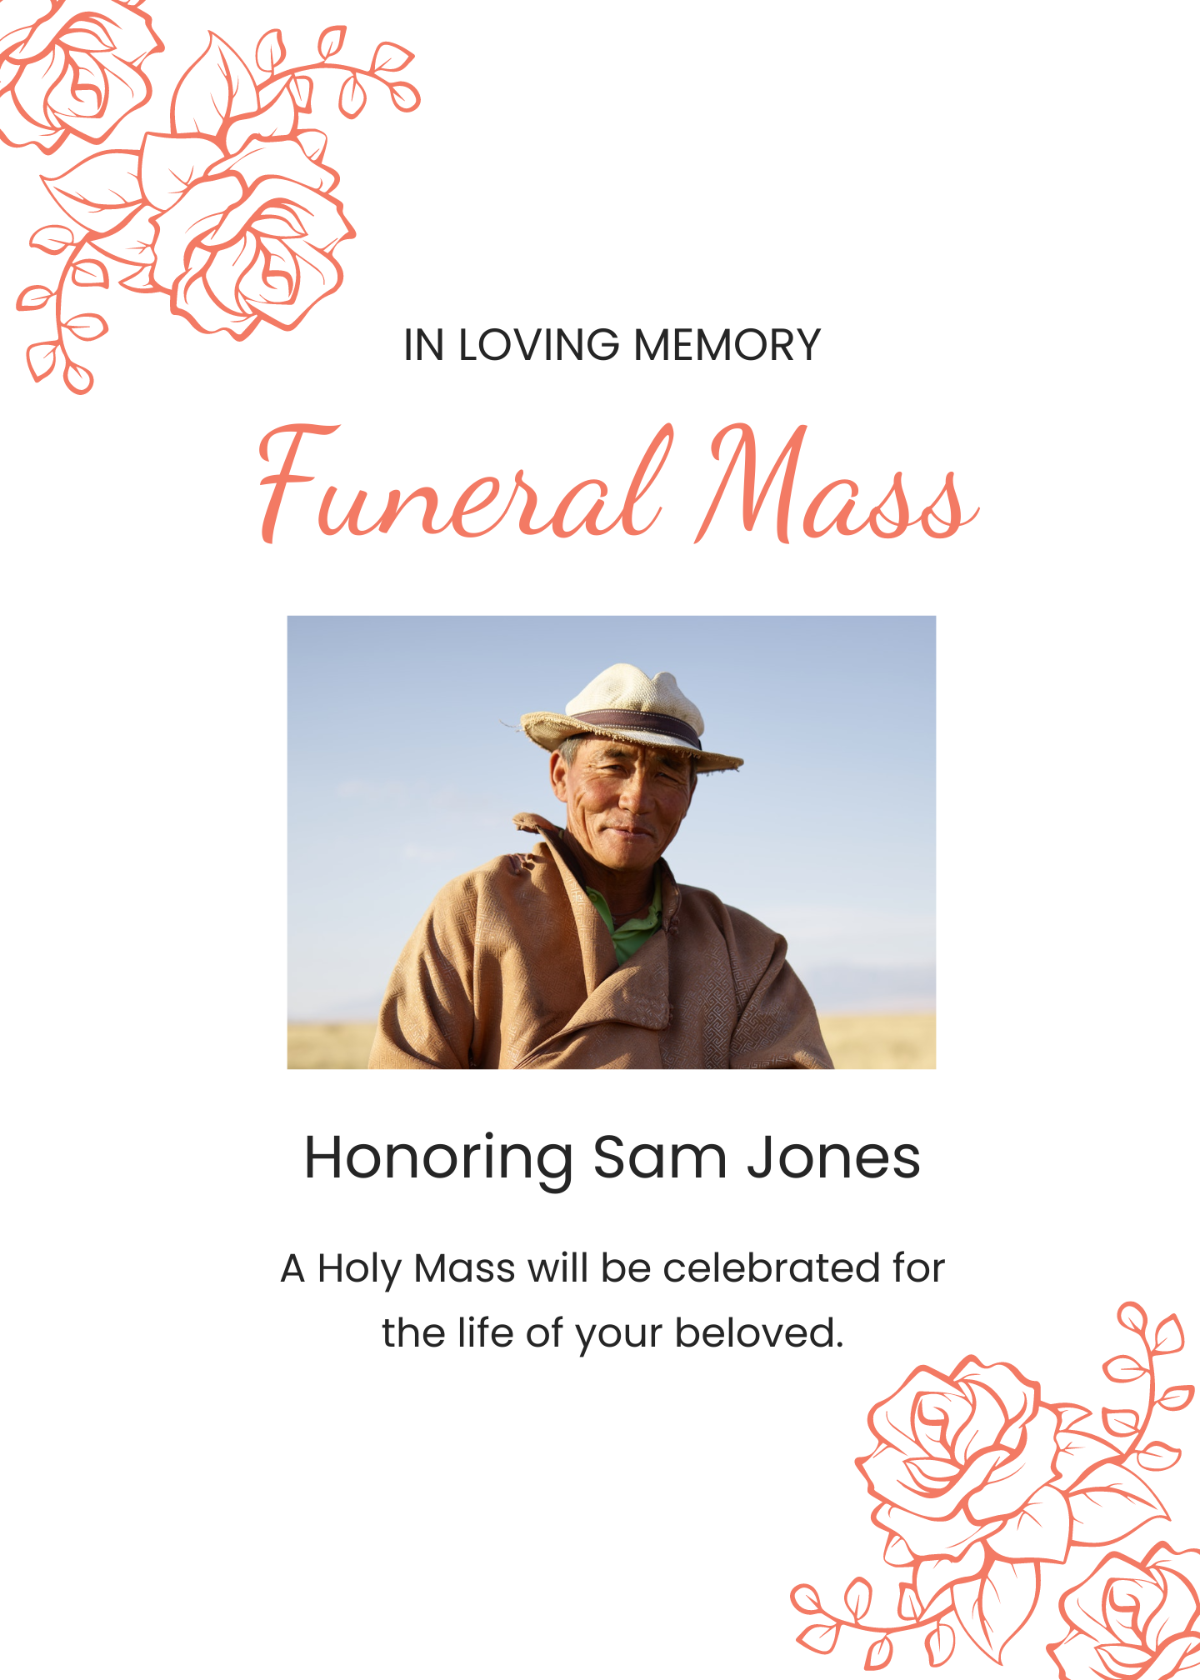 Sample Funeral Mass Card Template